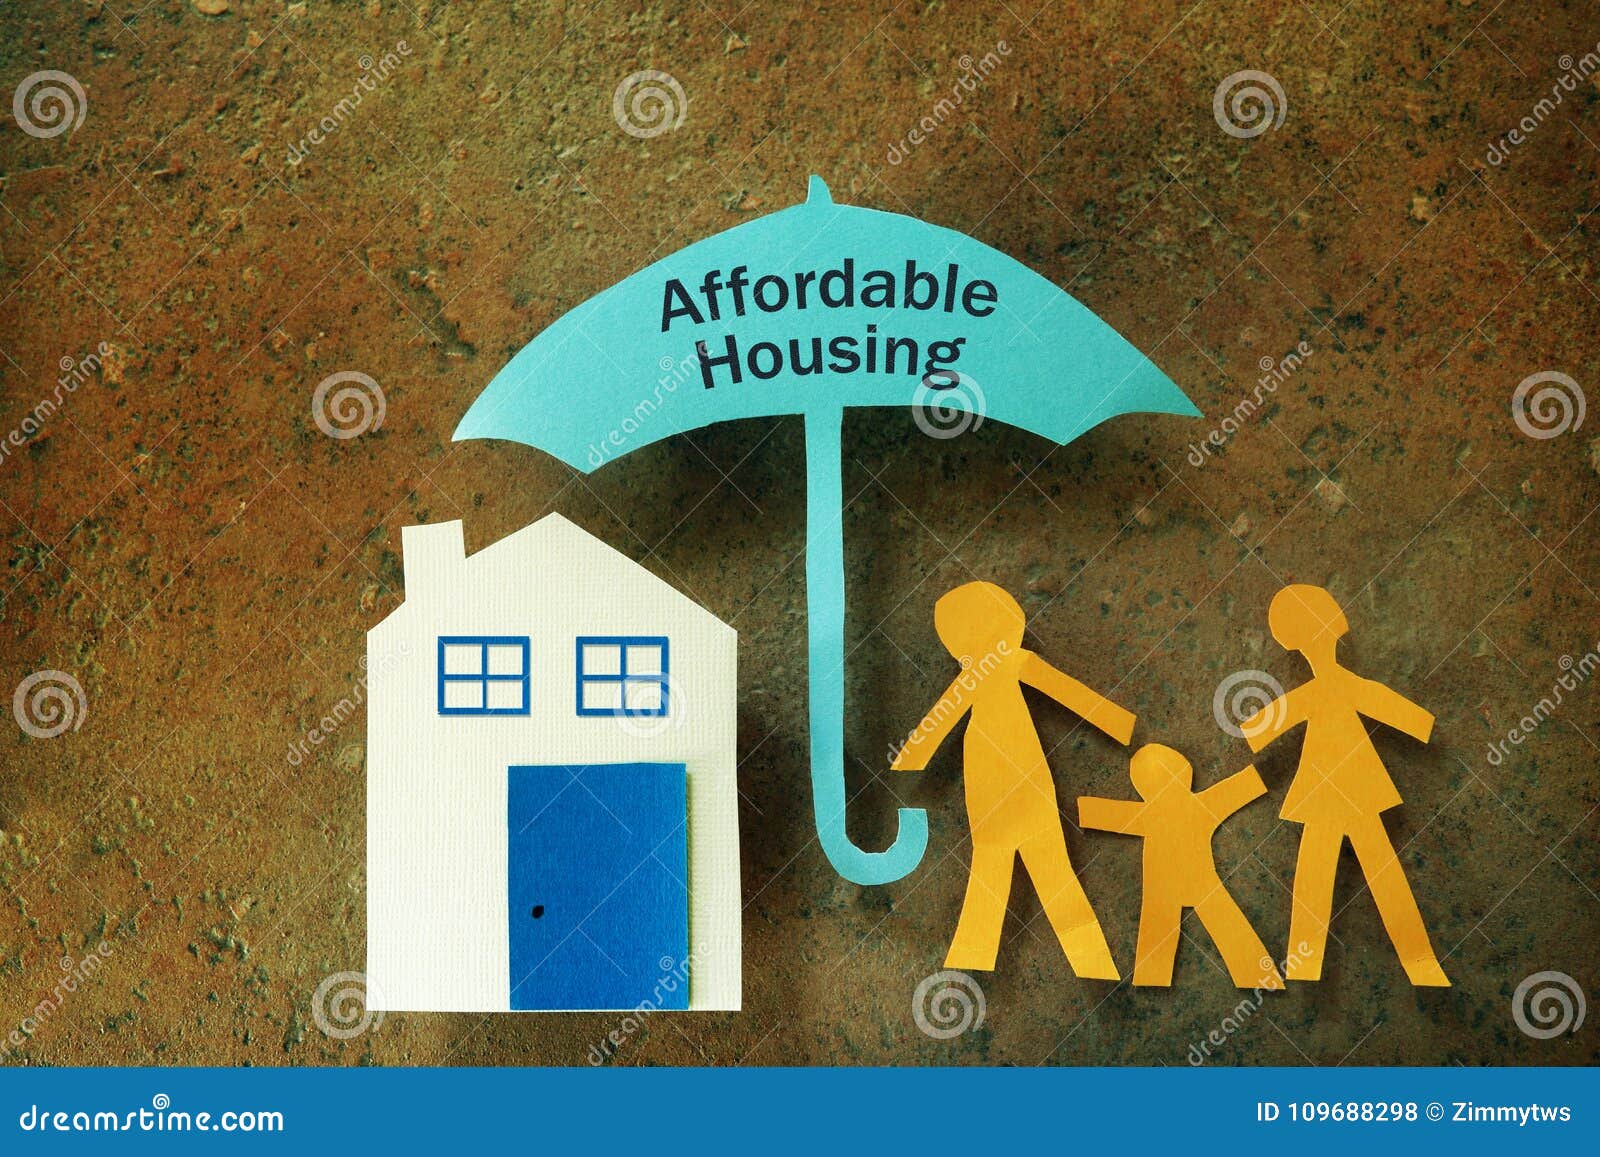 affordable housing family umbrella